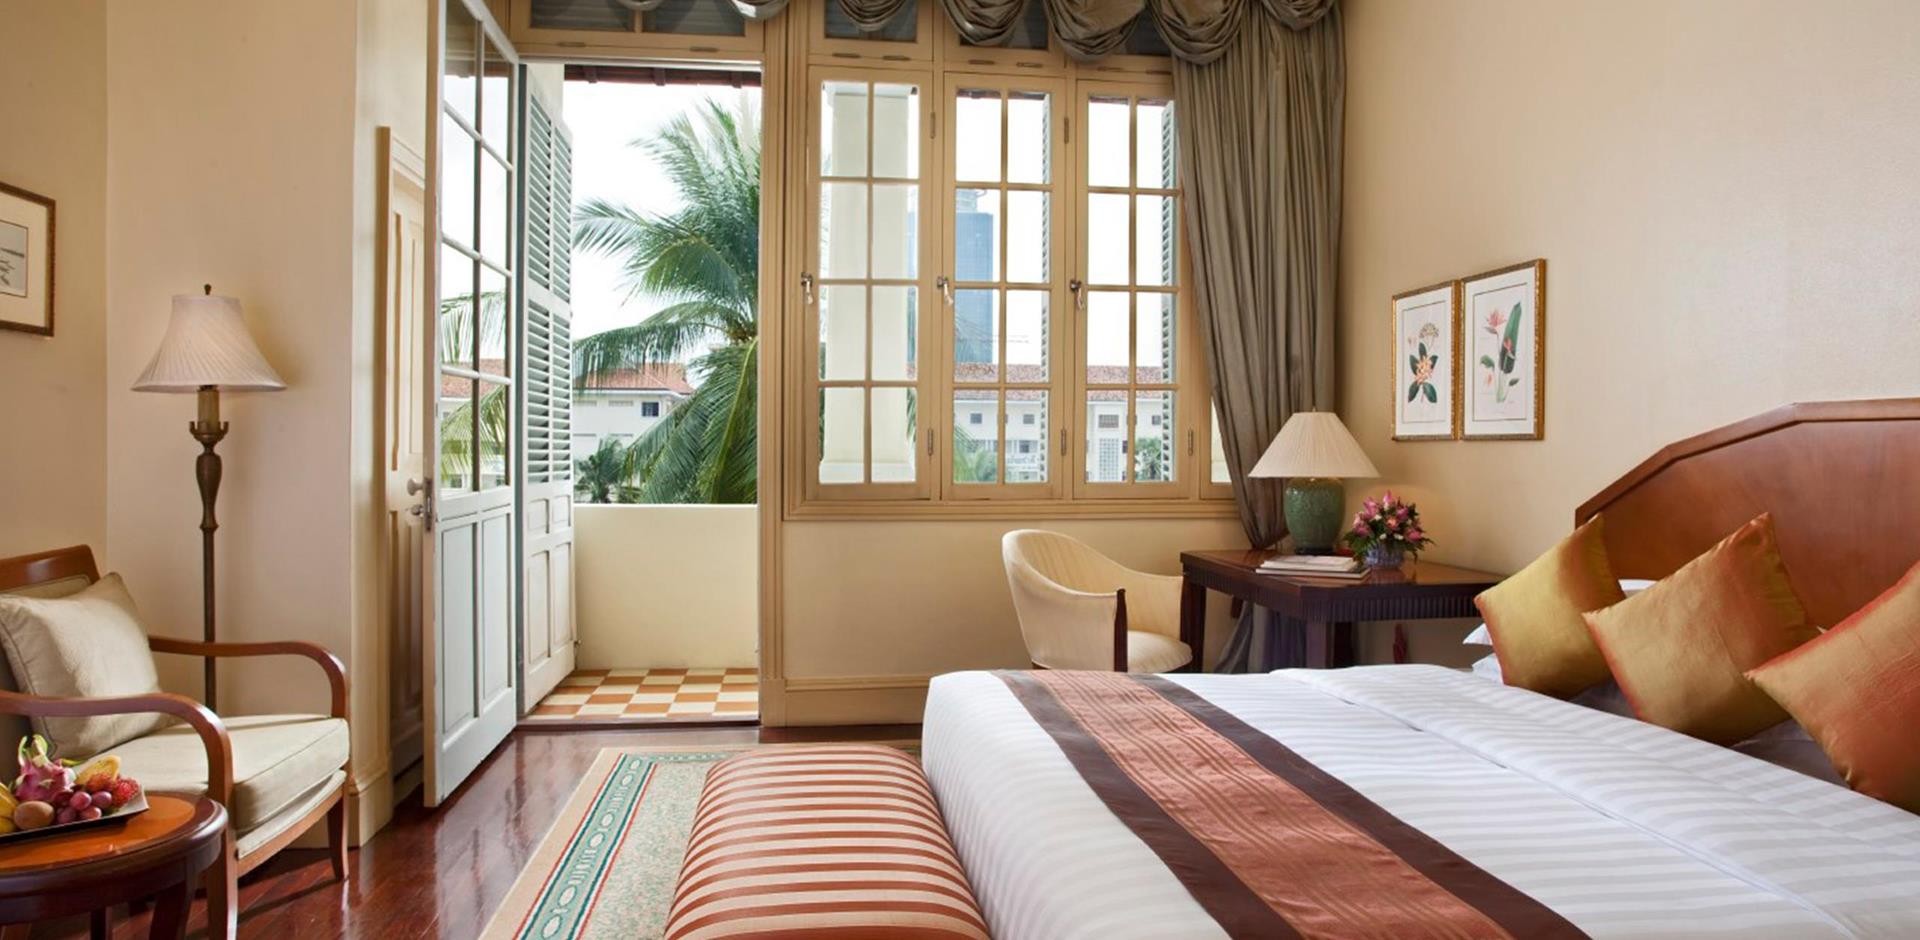 Bedroom, Raffles Hotel Le Royal, Cambodia, A&K